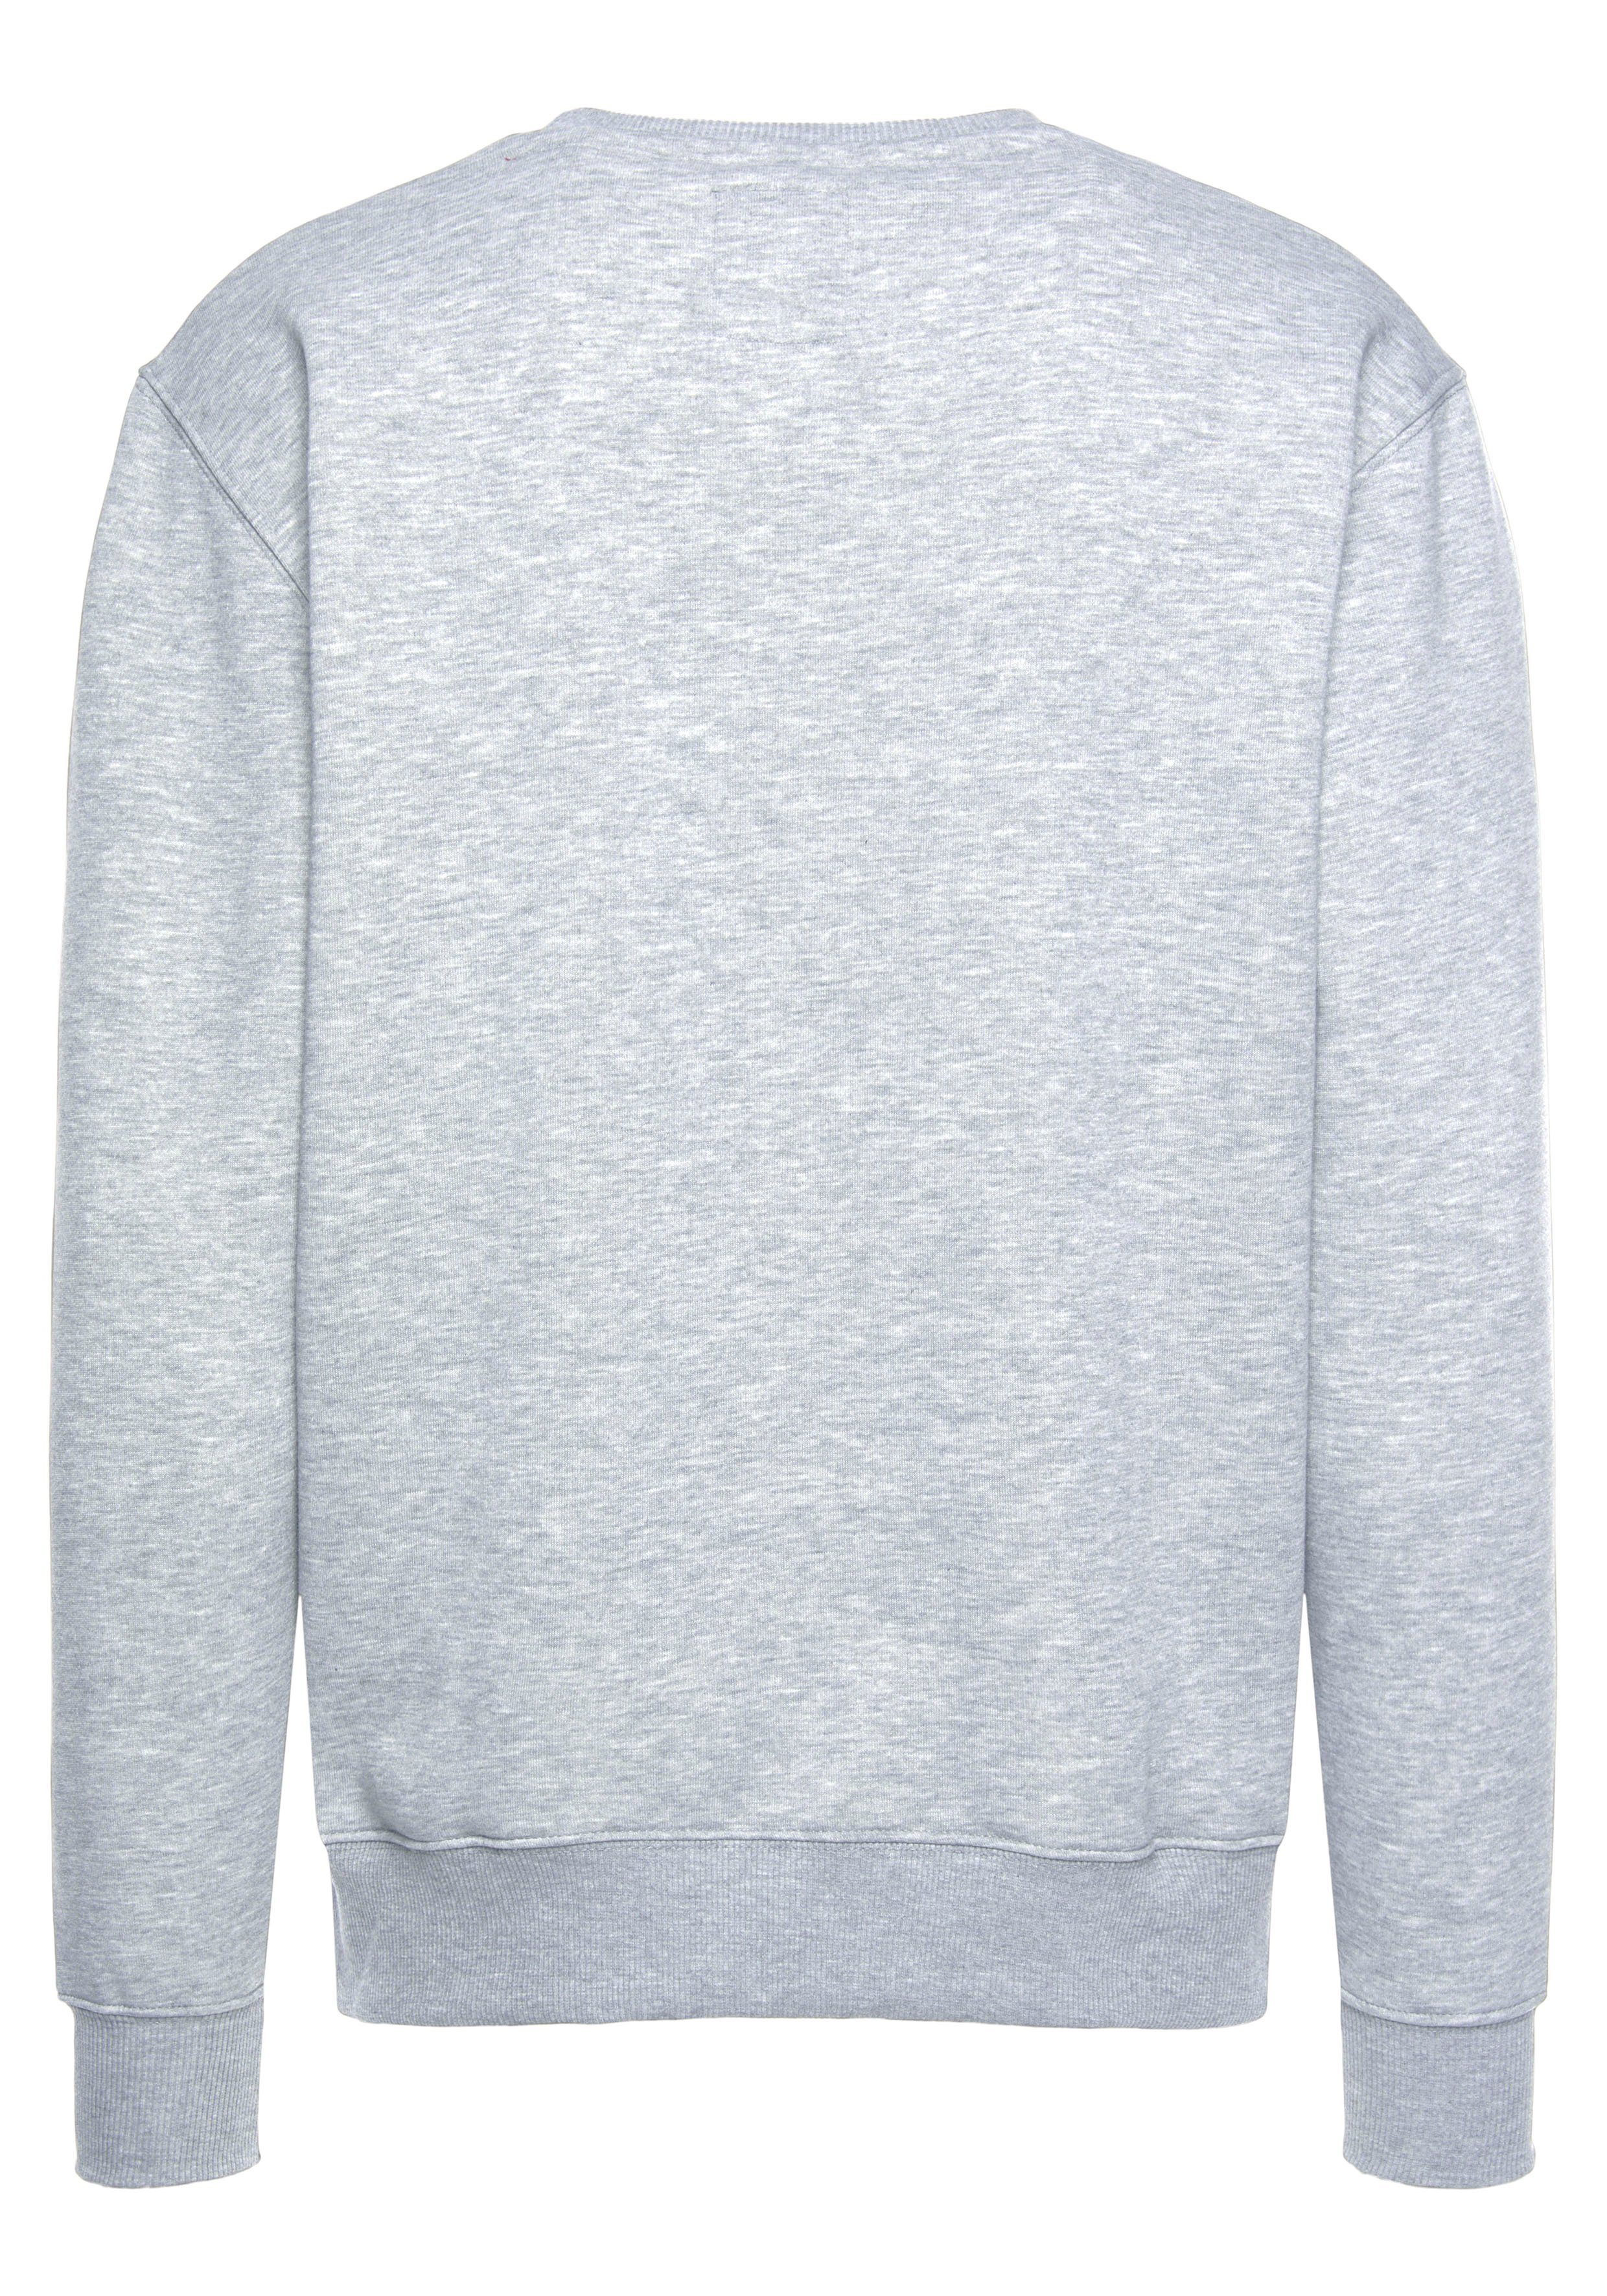 Sweater Industries Sweatshirt grey Basic heather Alpha